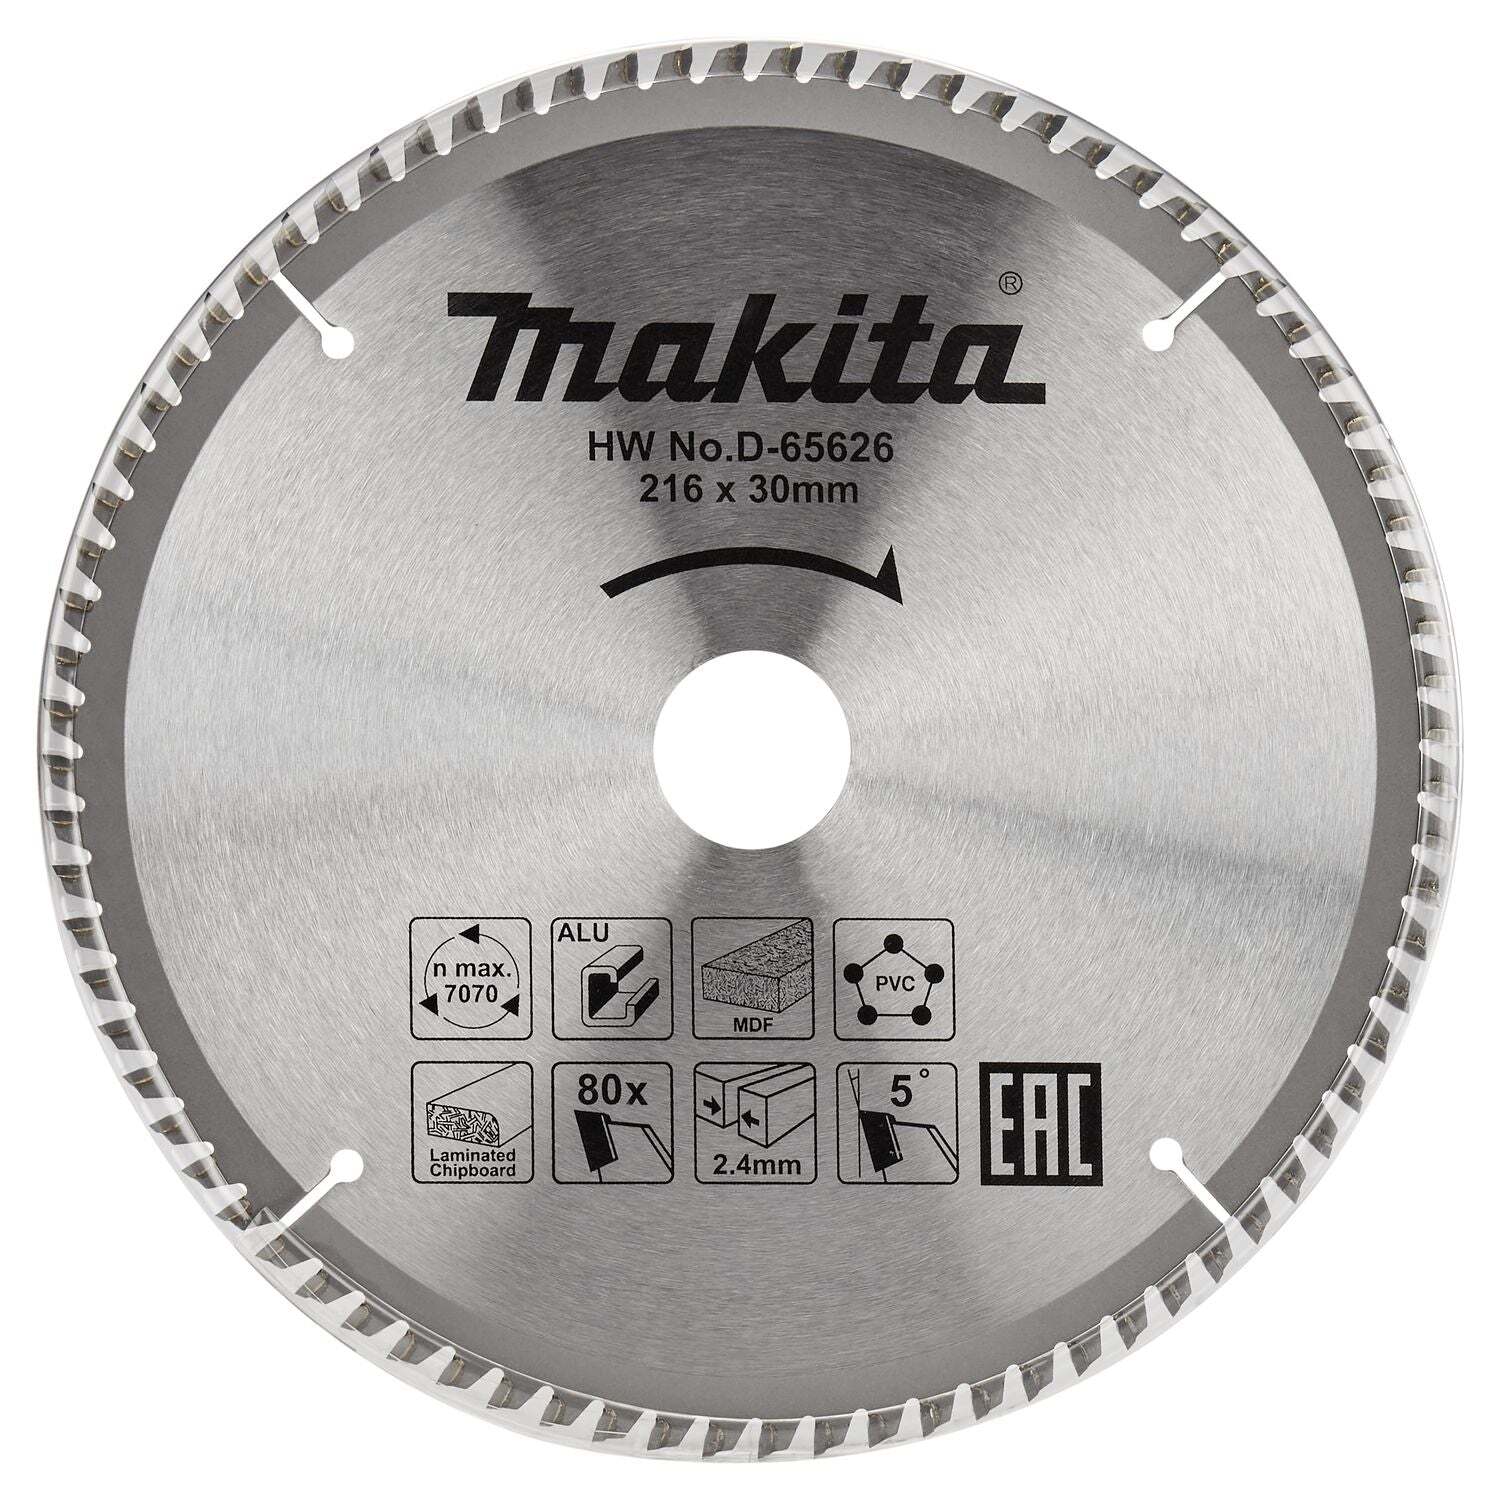 Makita D-65626 Afkortzaagblad voor Multimaterial | Standaard | Ø 216mm Asgat 30mm 80T